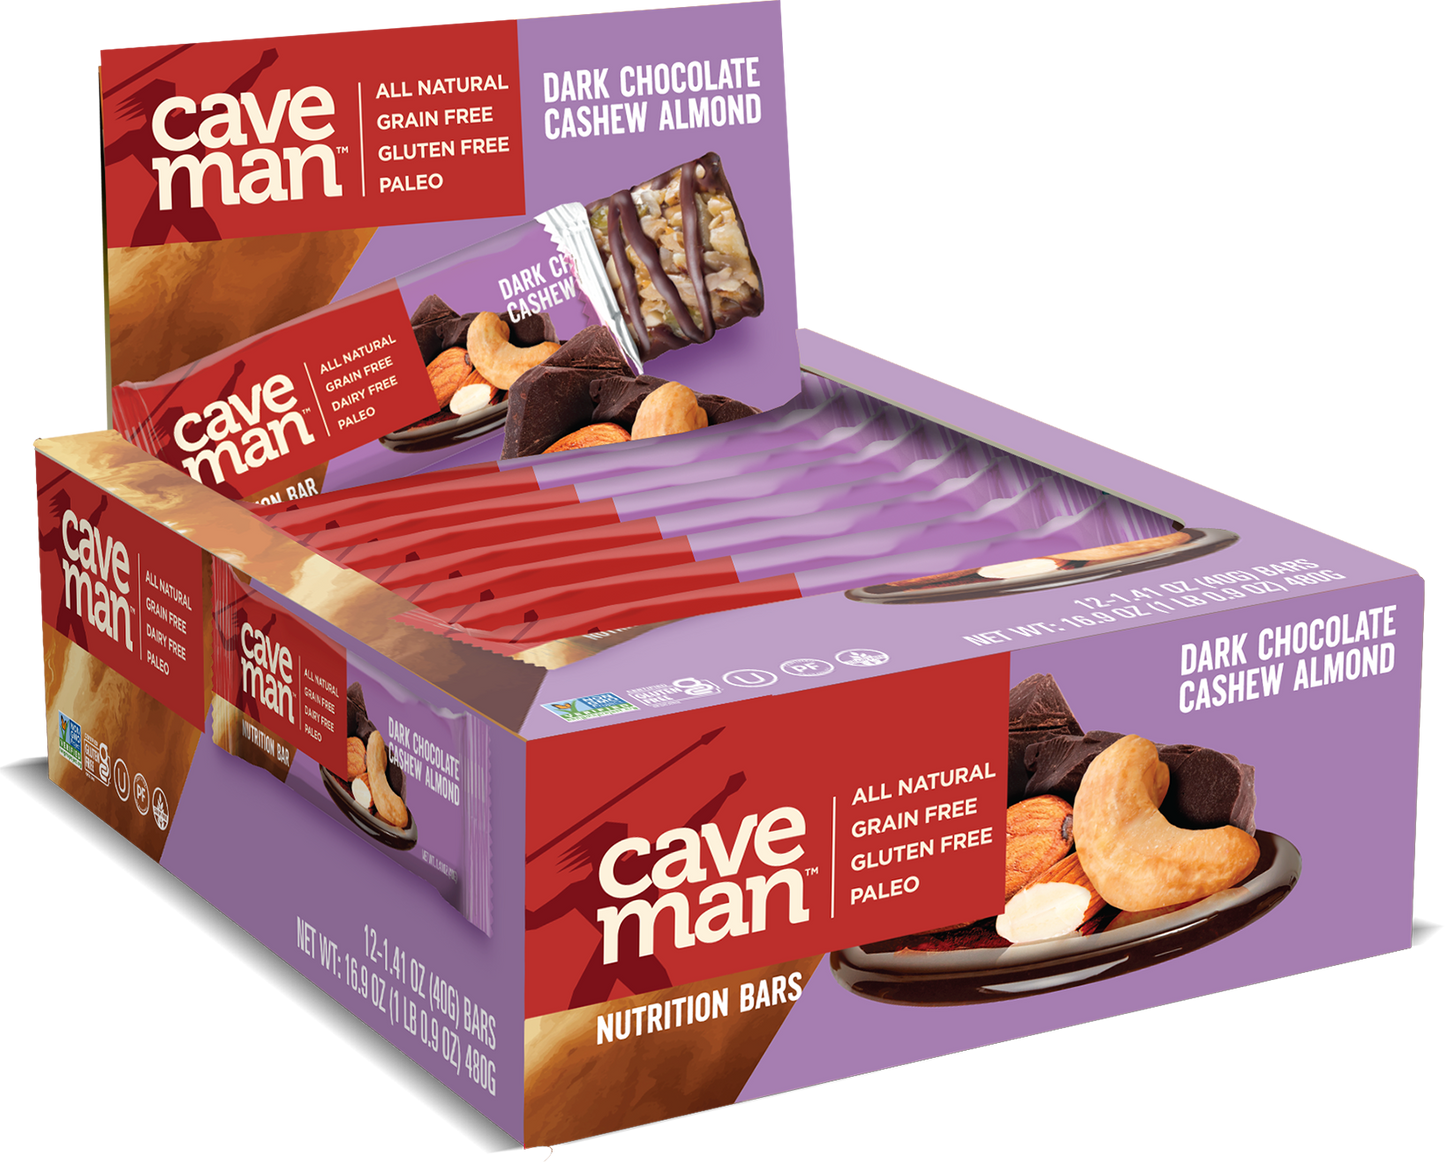 Dark Chocolate Cashew Almond Nutrition Bars by Caveman Foods